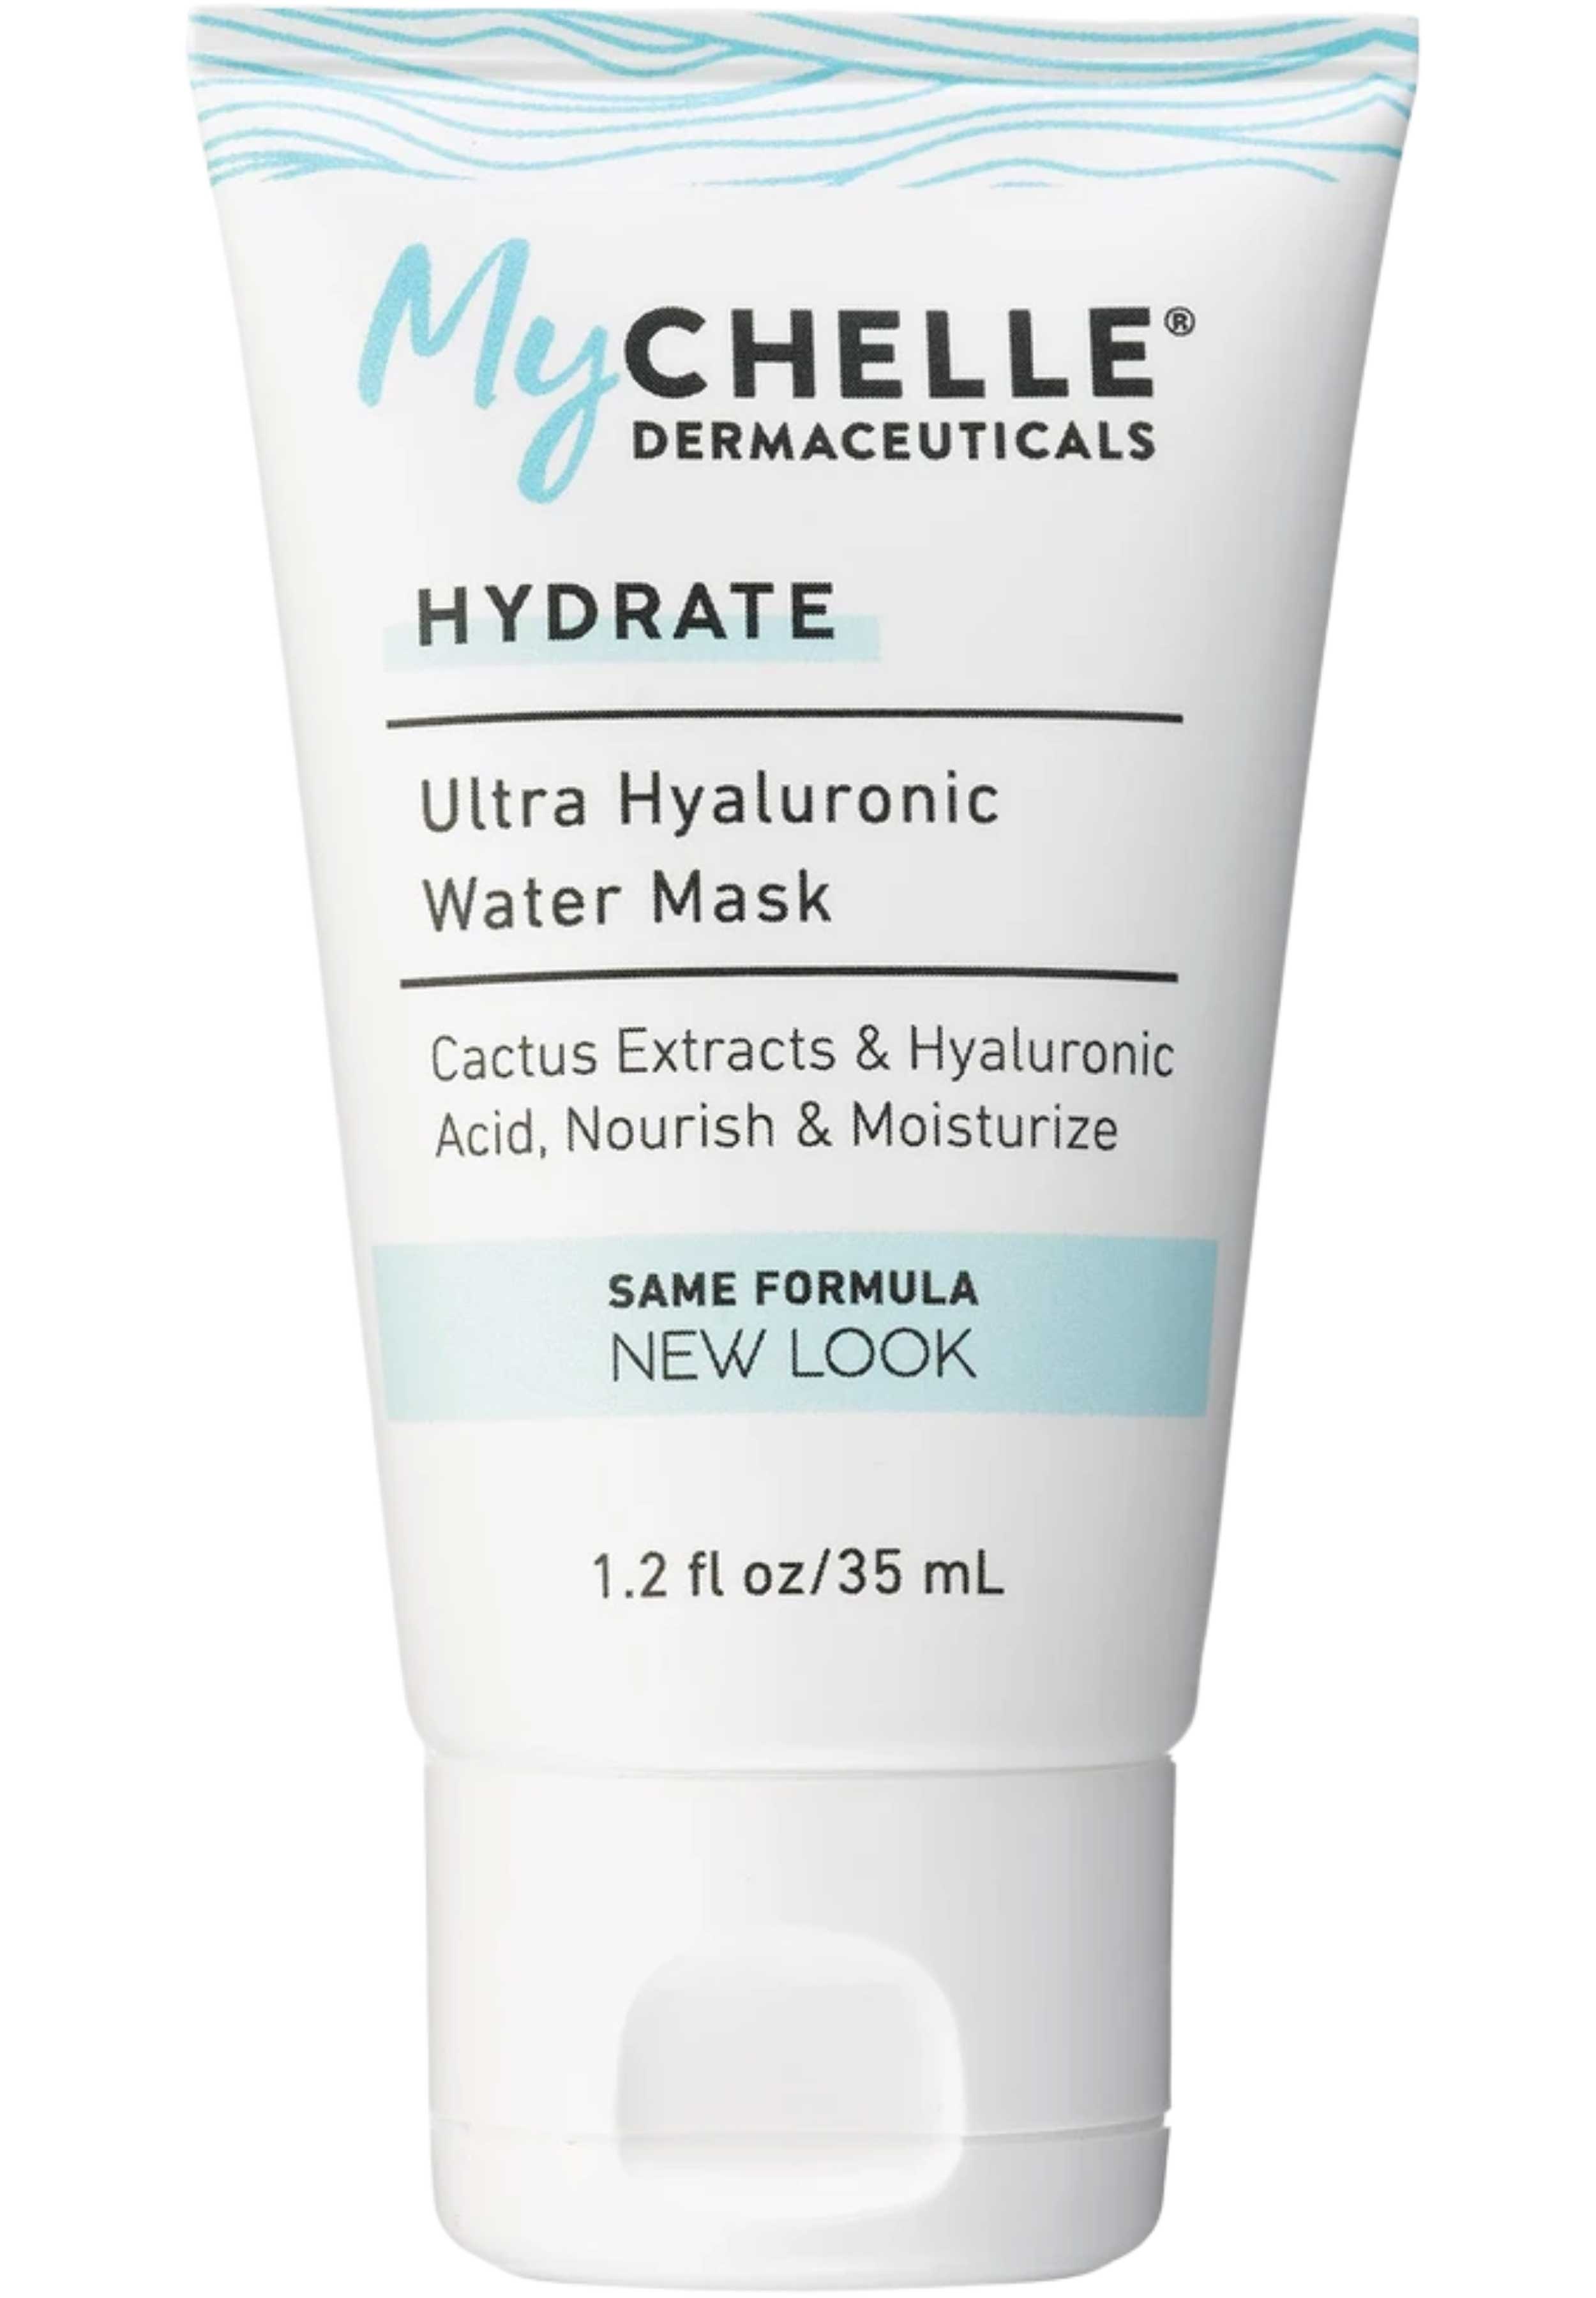 MyChelle Dermaceuticals Ultra Hyaluronic Water Mask